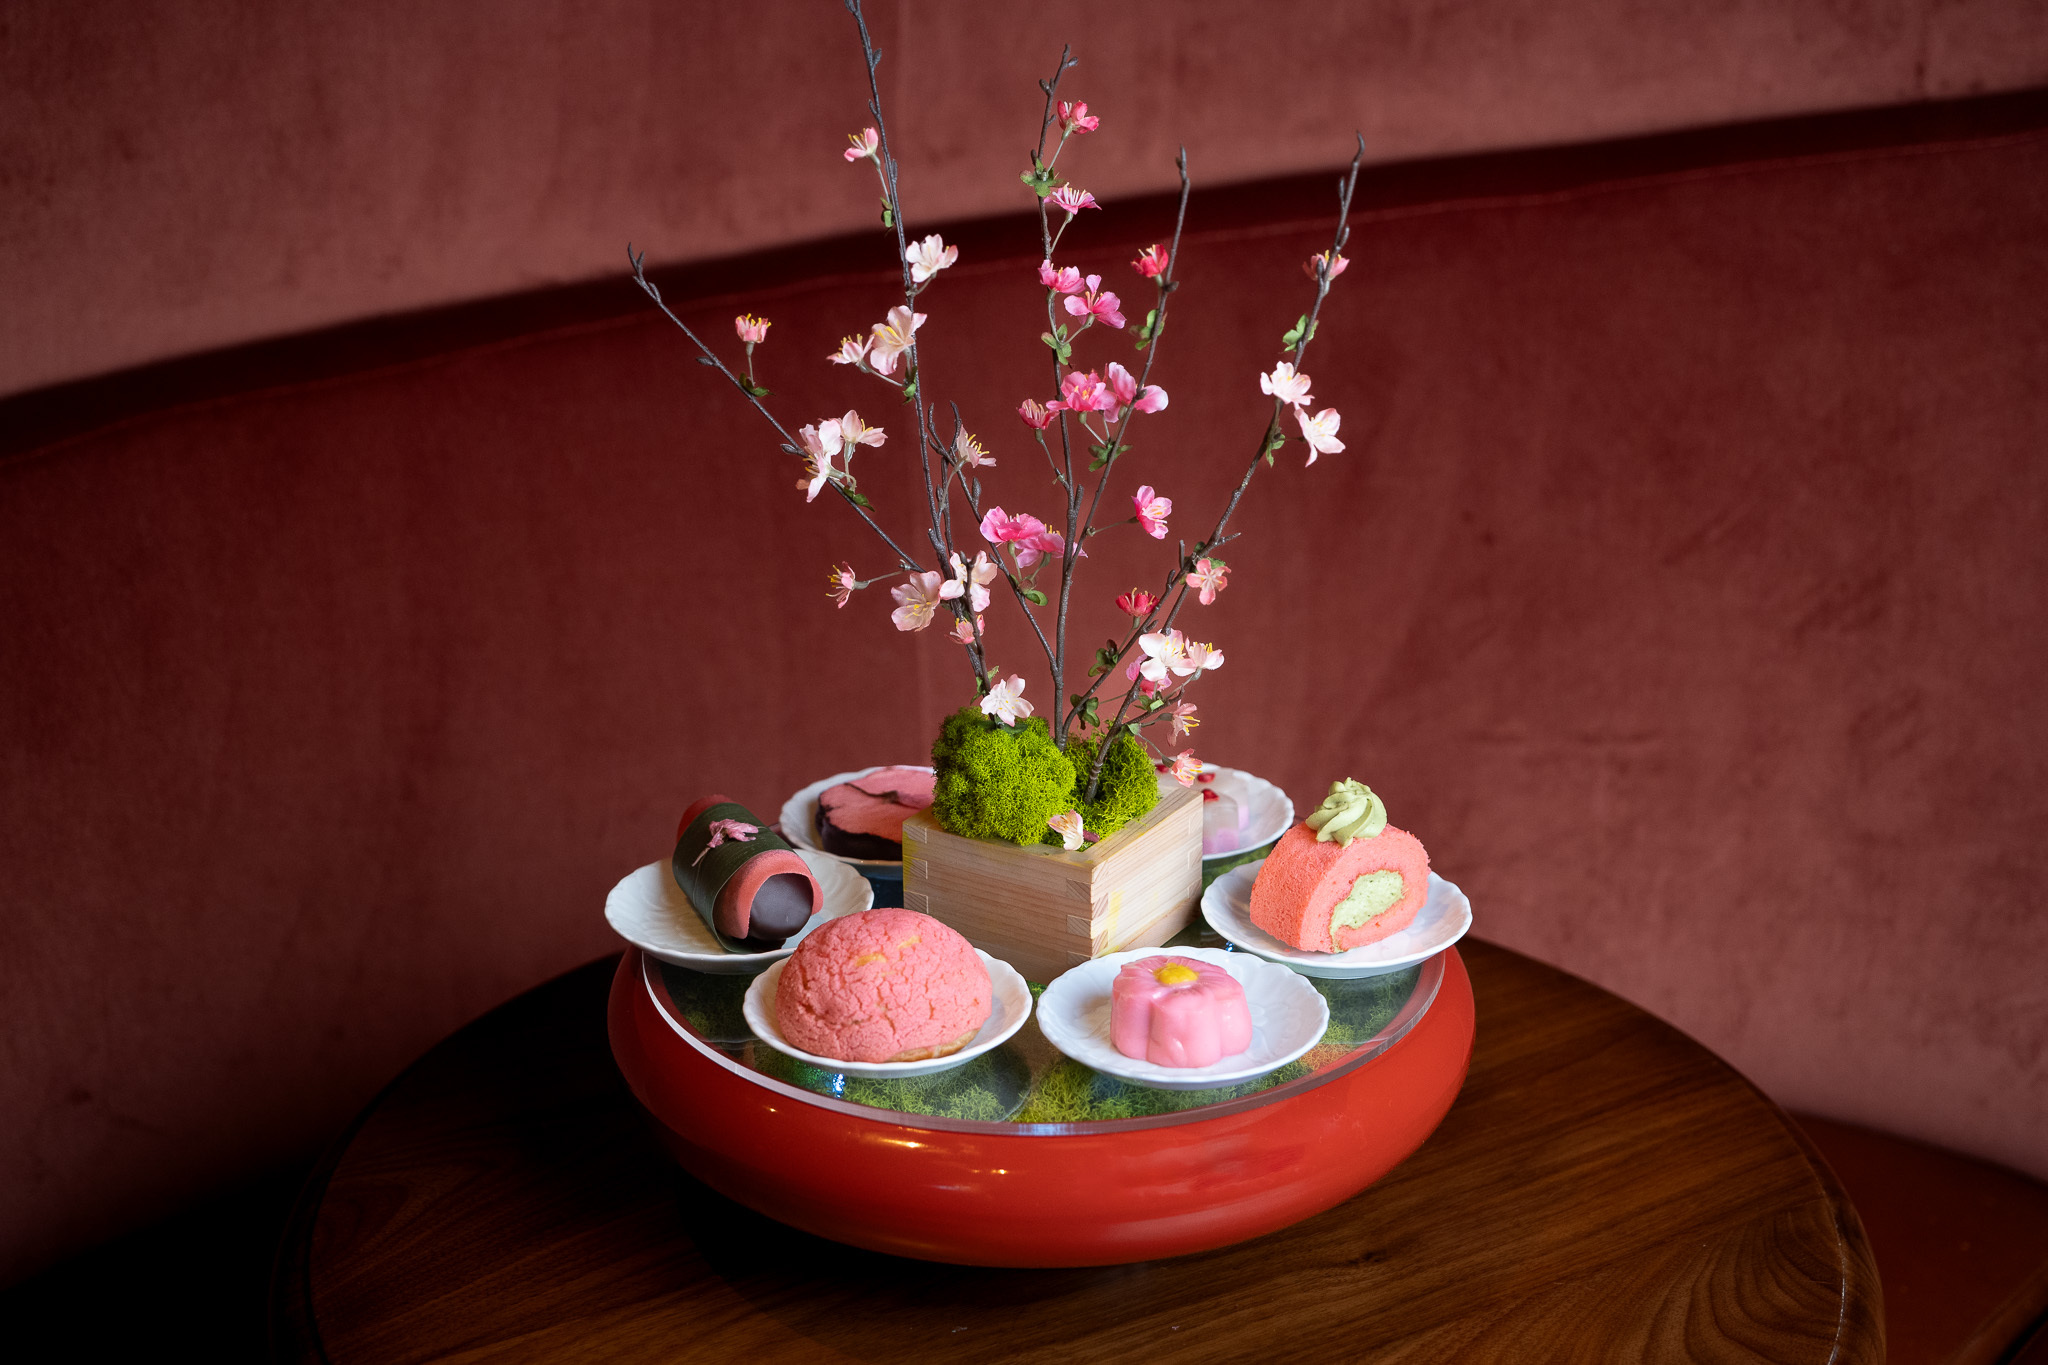 A gorgeous new cherry blossom dessert platter is blooming at Sake No Hana